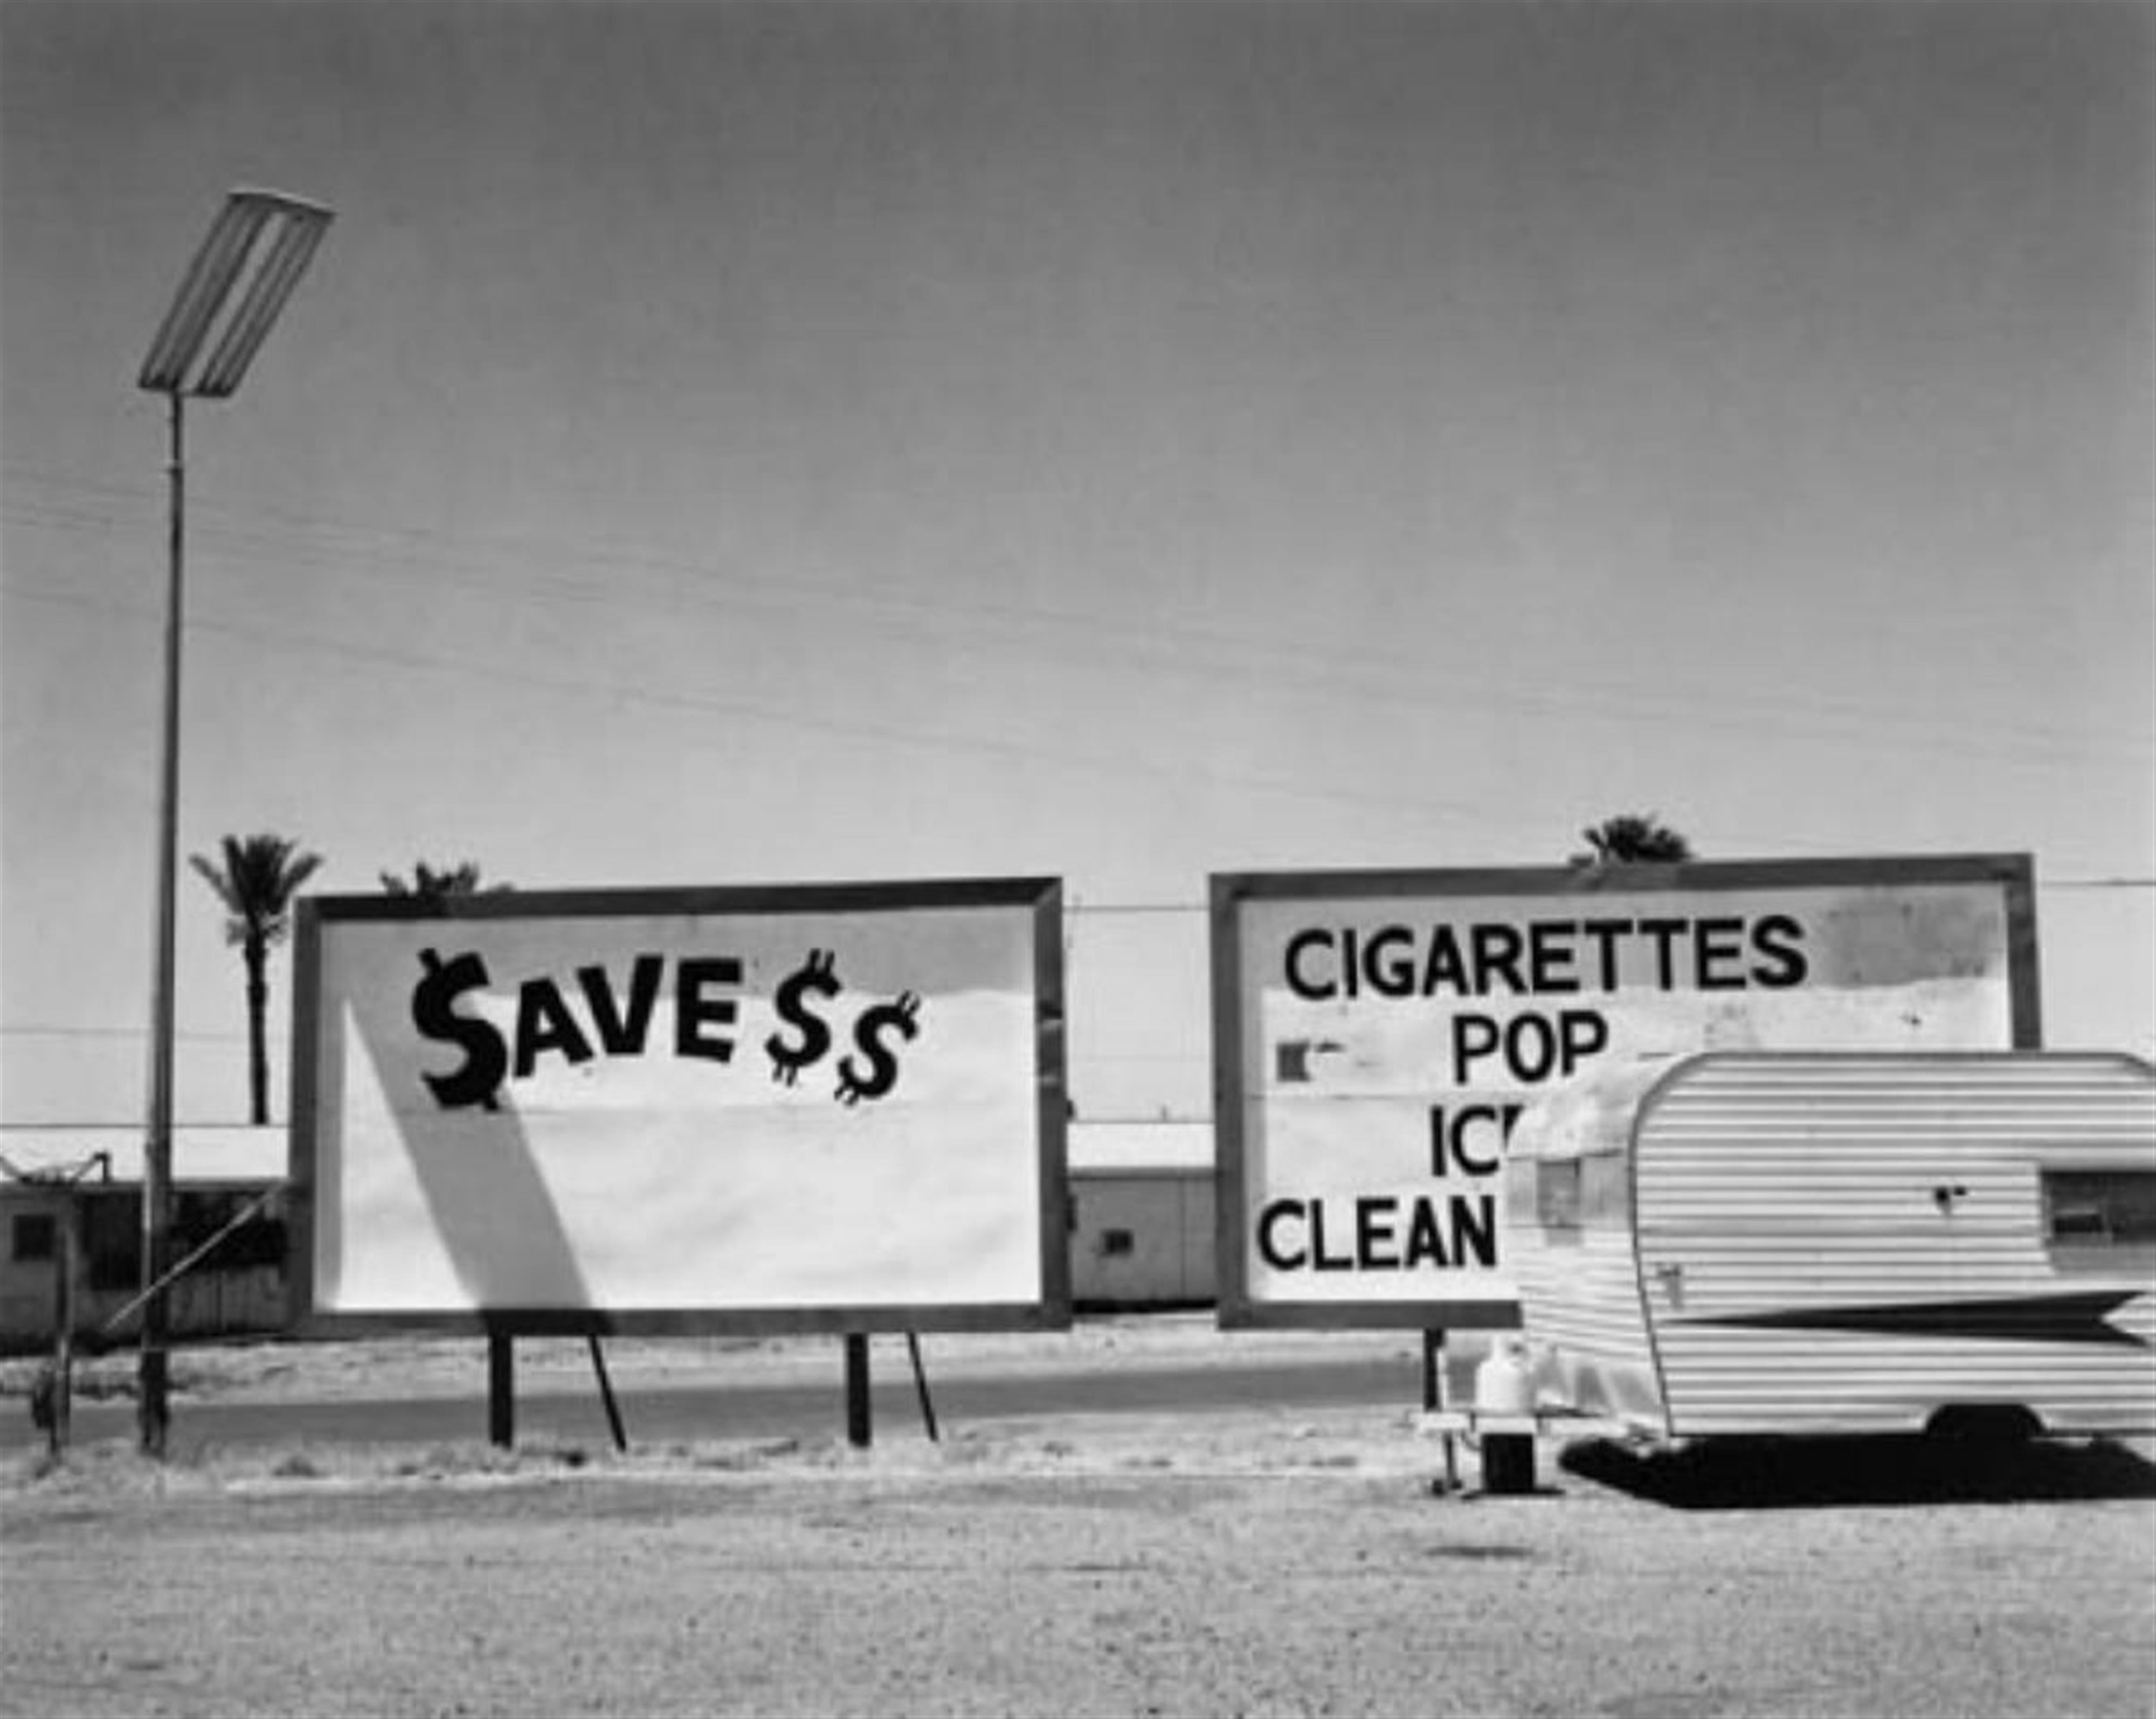 Wim Wenders - "Ave Dollars", Gila Bend Arizona - image-1